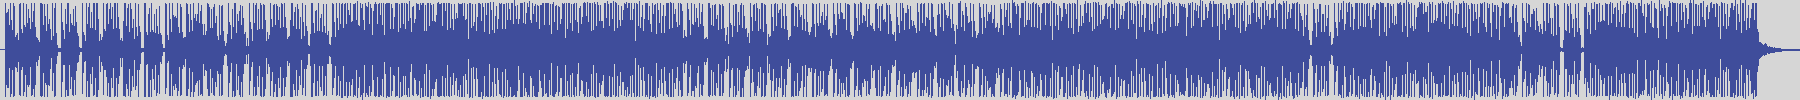 nf_boyz_records [NFY090] Campanini's - Boa Tarde [] audio wave form